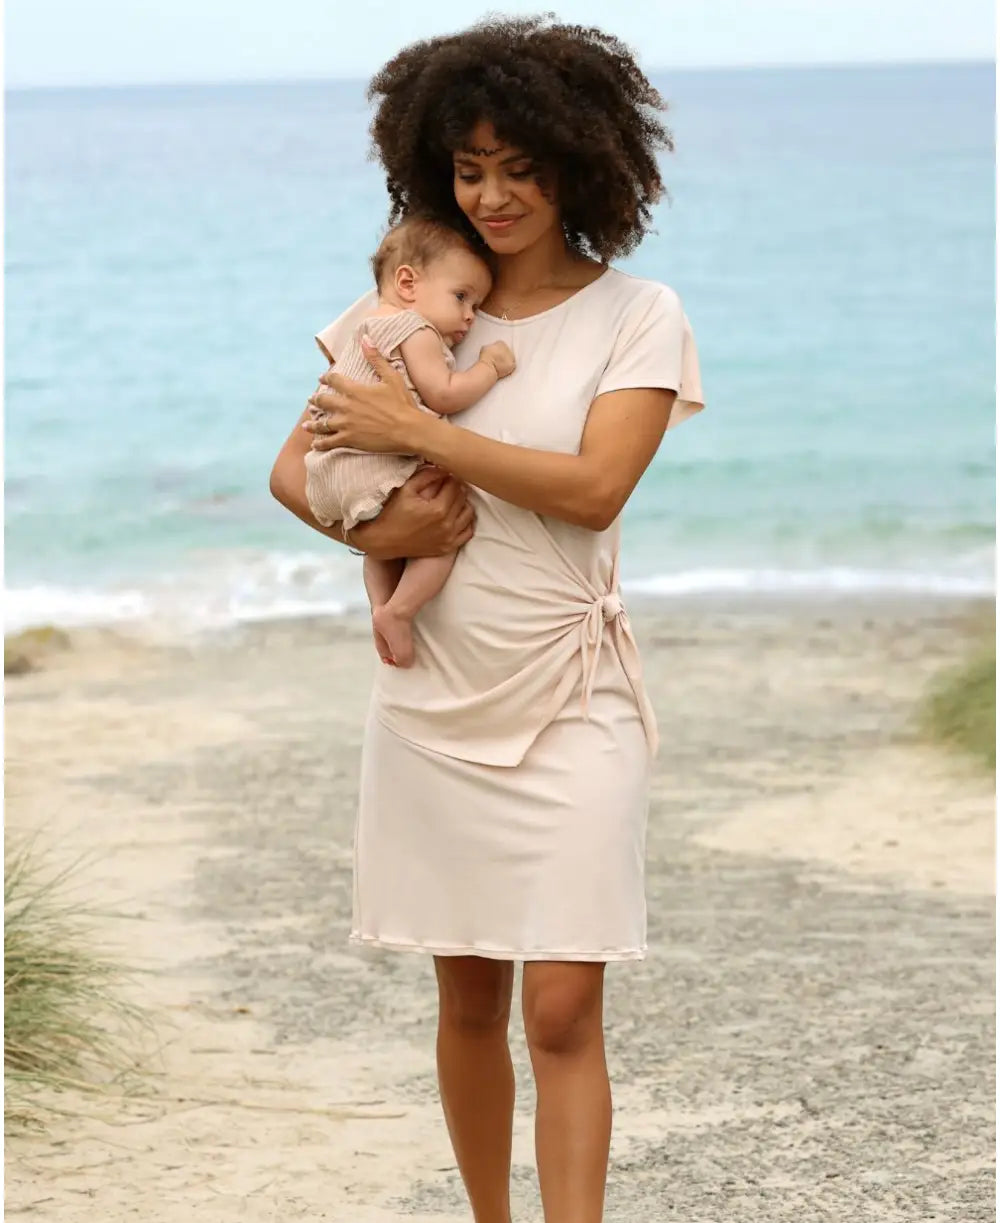 Roxie Cotton Modal Maternity & Nursing Dress in Khaki by Ripe Maternity